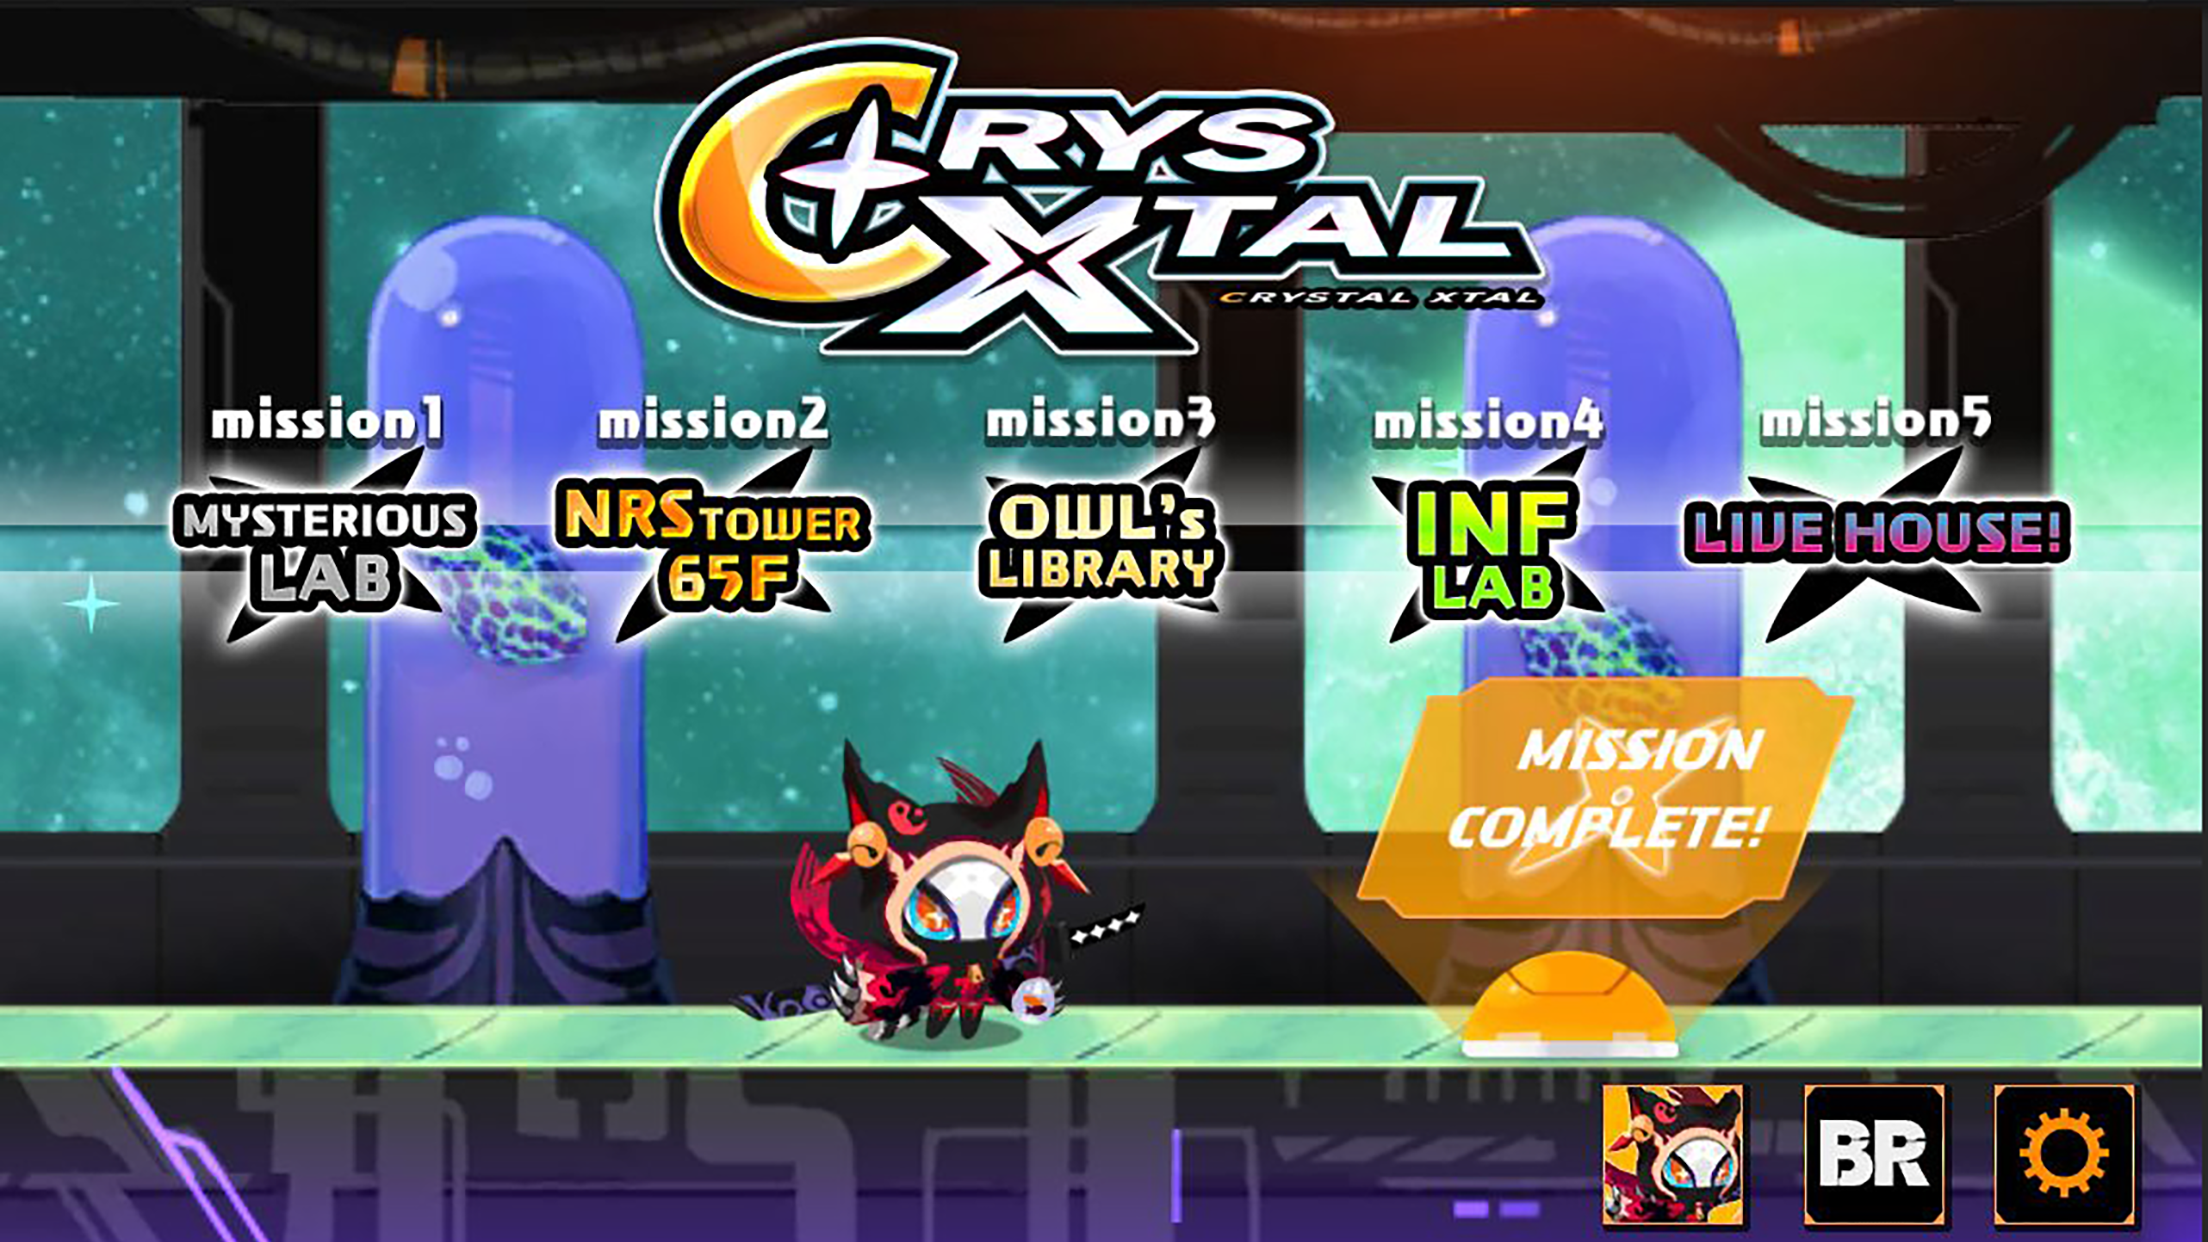 Screenshot 1 of CRYSTAL XTAL - 닌자 고양이 슈팅 1.3